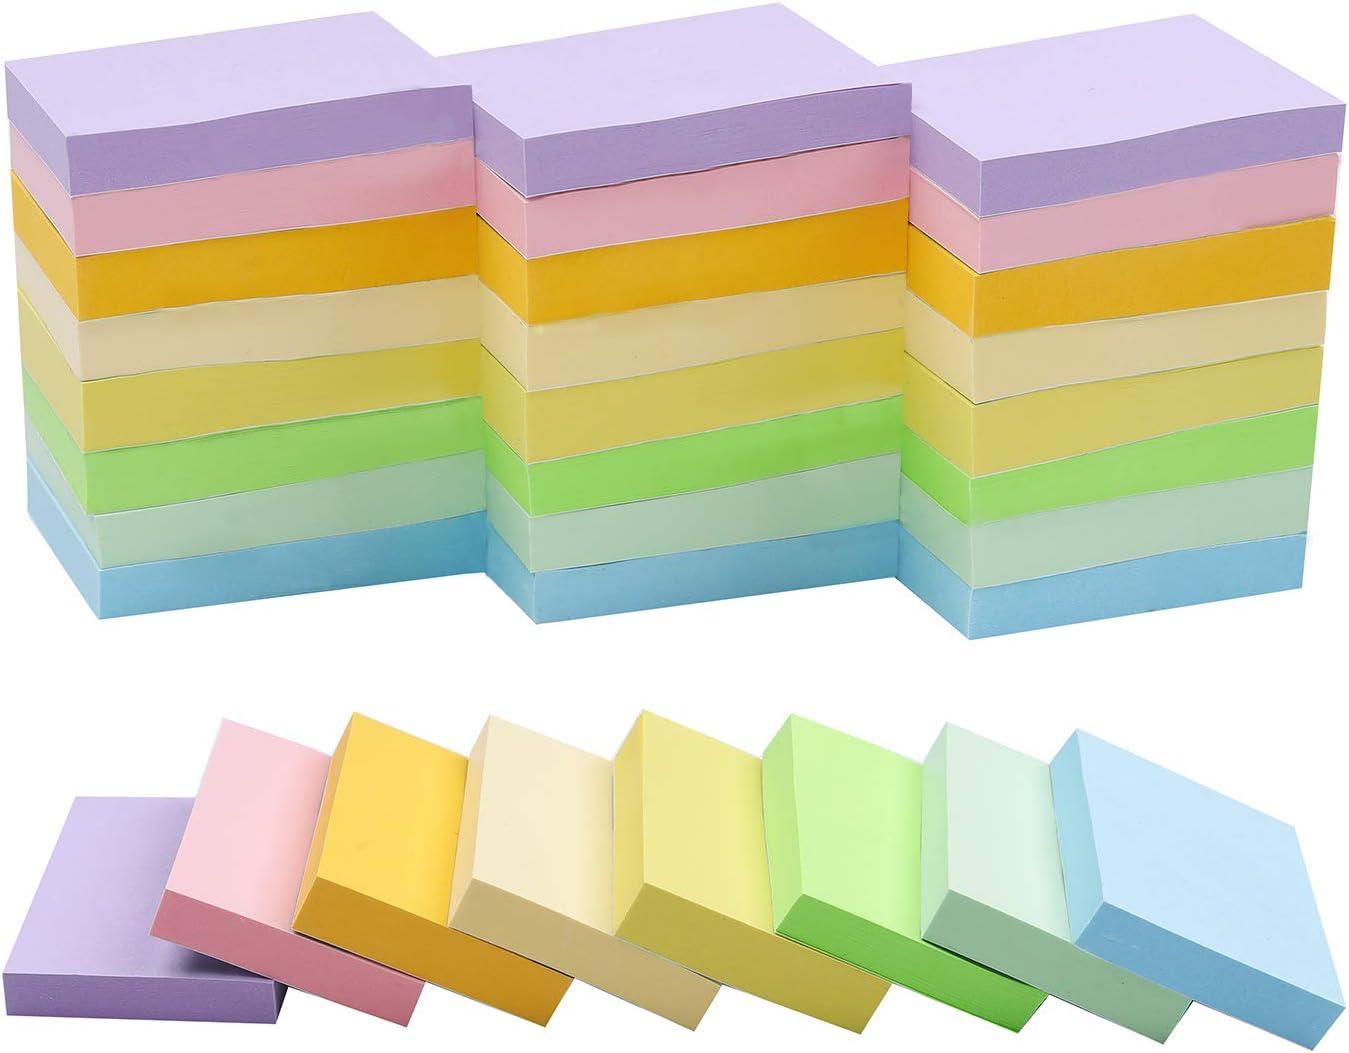 vanpad sticky notes 1 5x2 inches light colors self-stick pads 24 pack 75 sheets/pad  vanpad b08l4dzml2